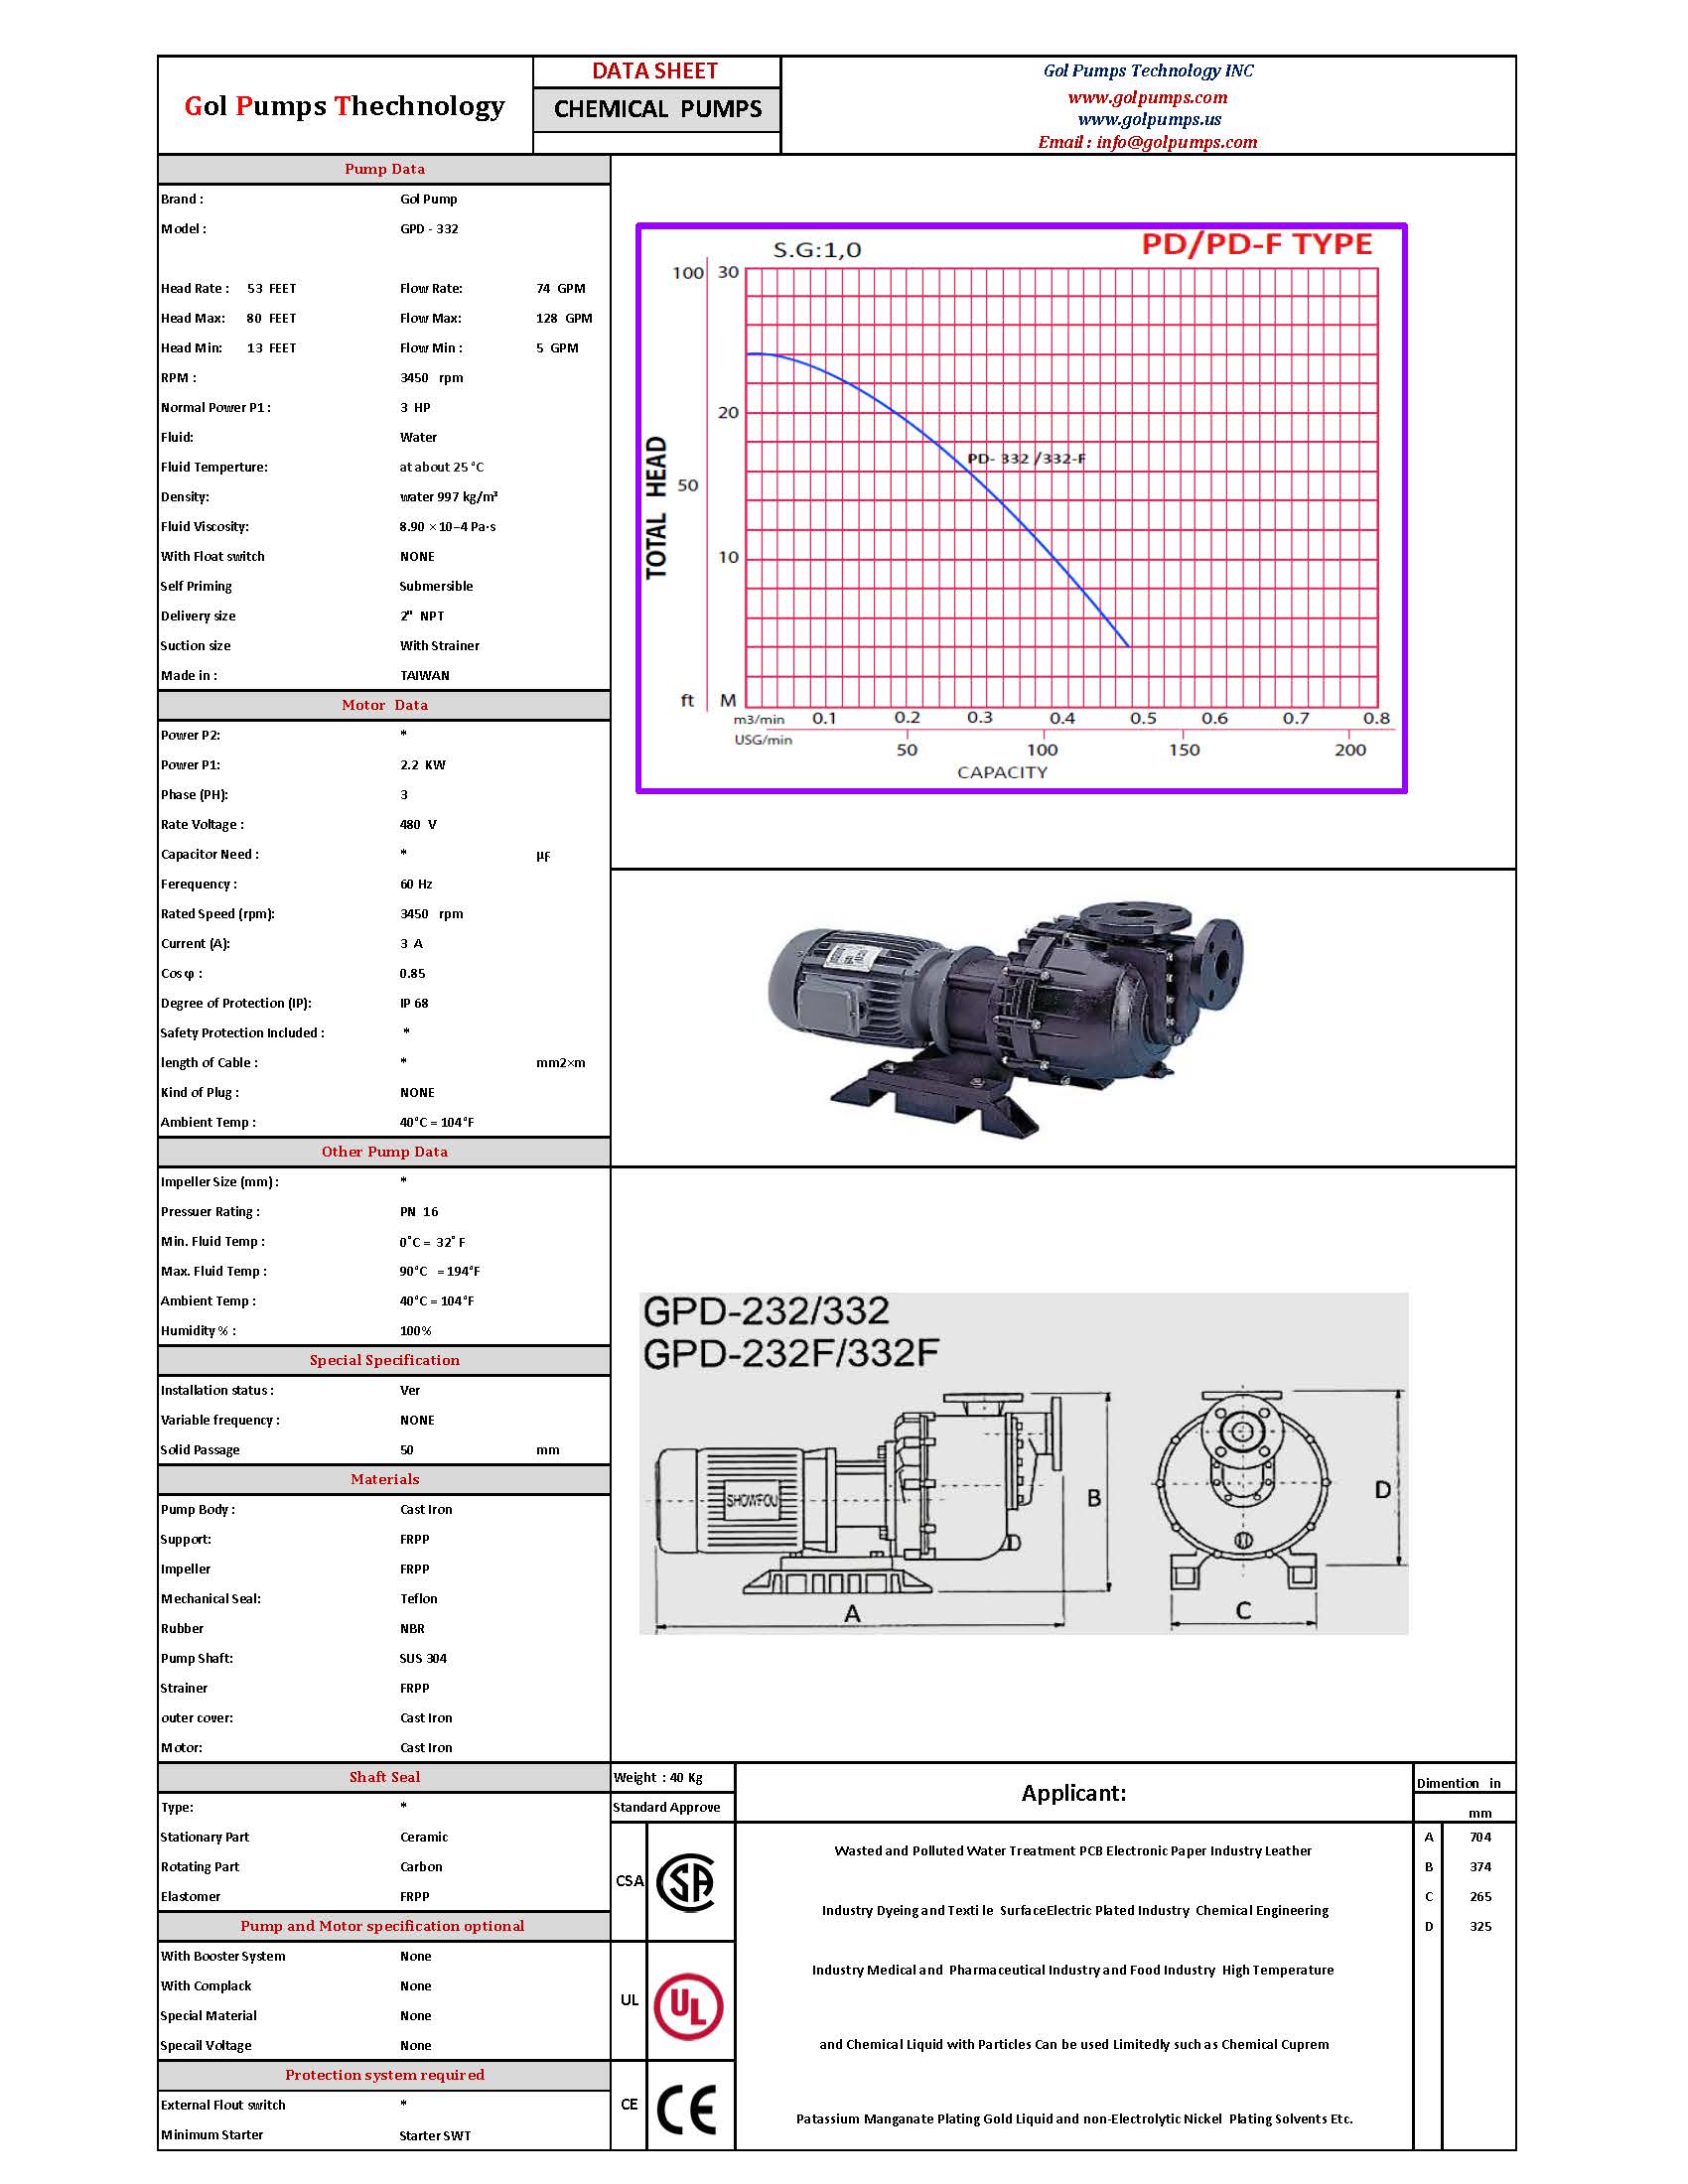 GPD-332 Chemical Pump Data Sheet